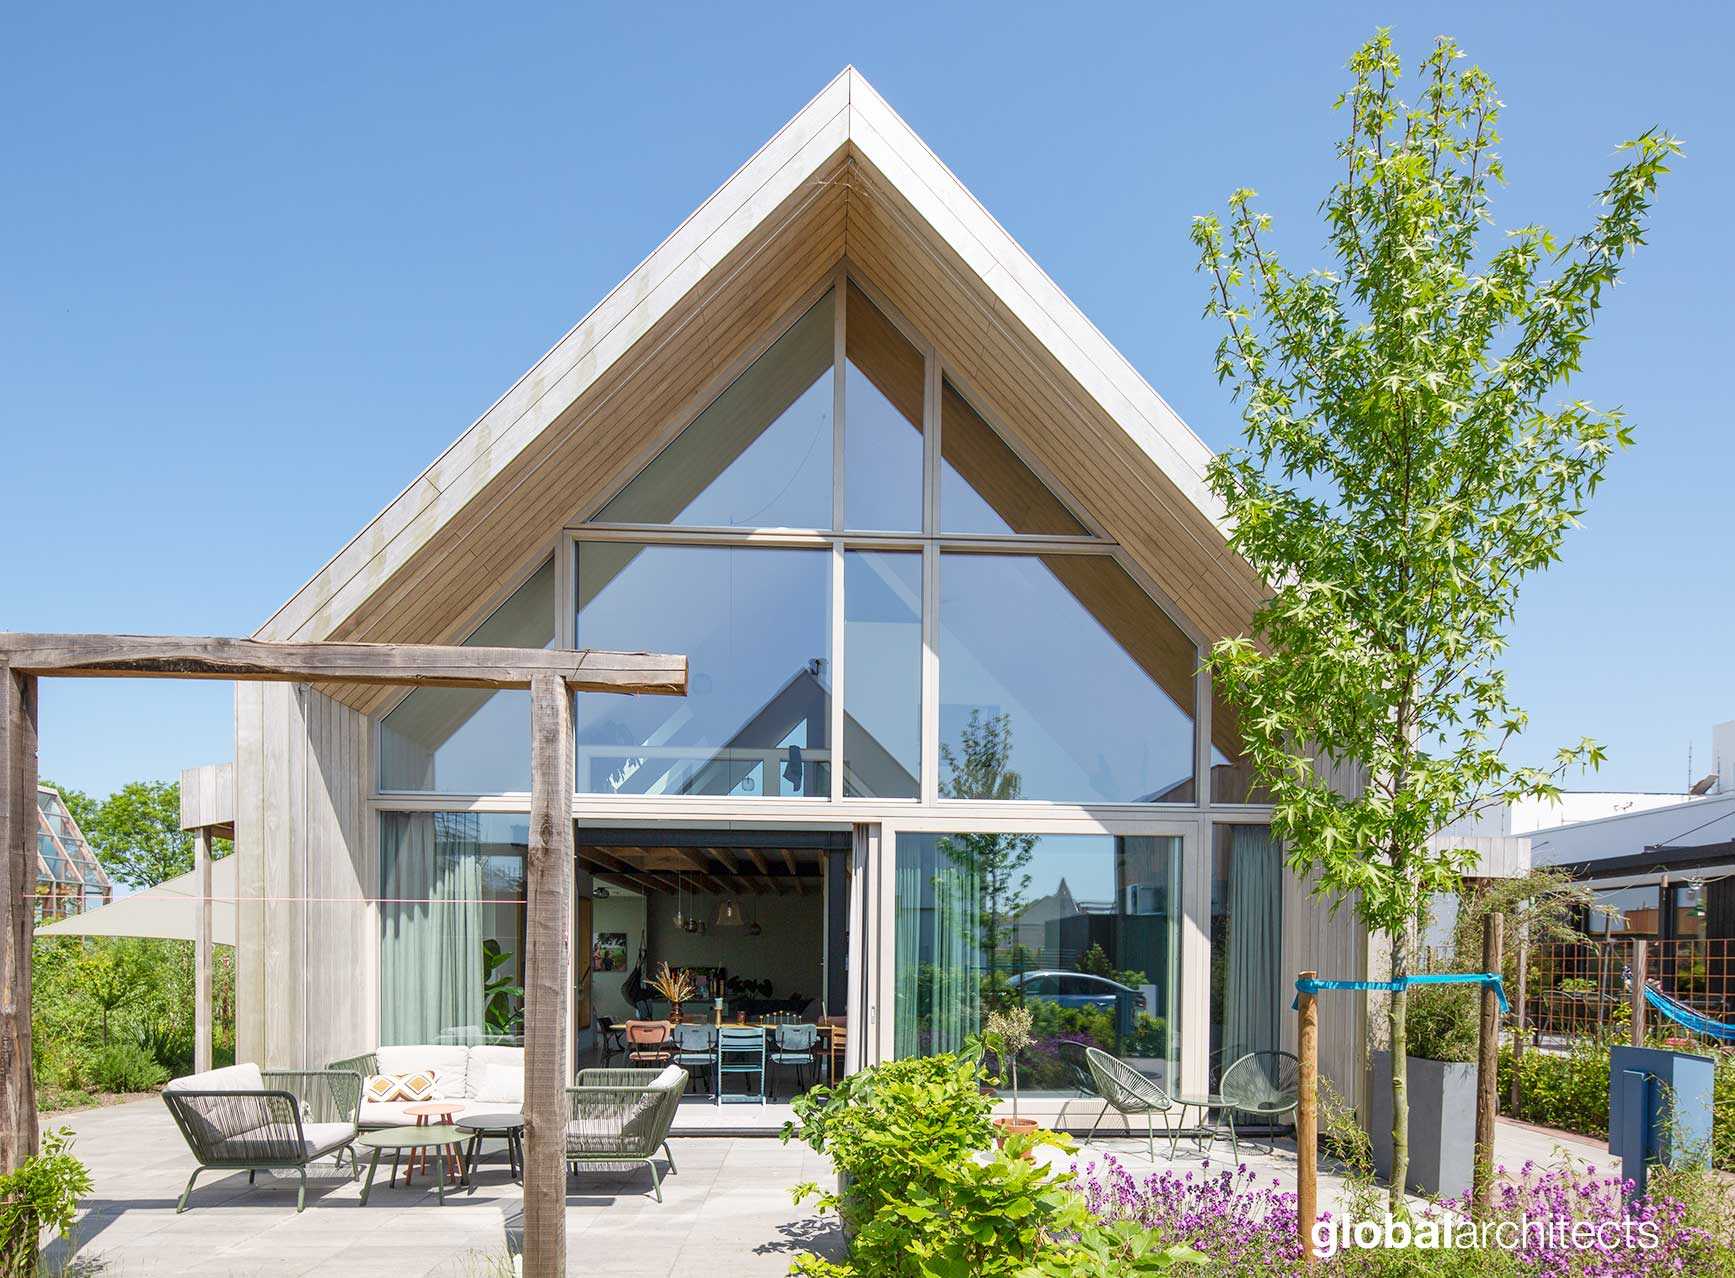 A modern barn-inspired home.